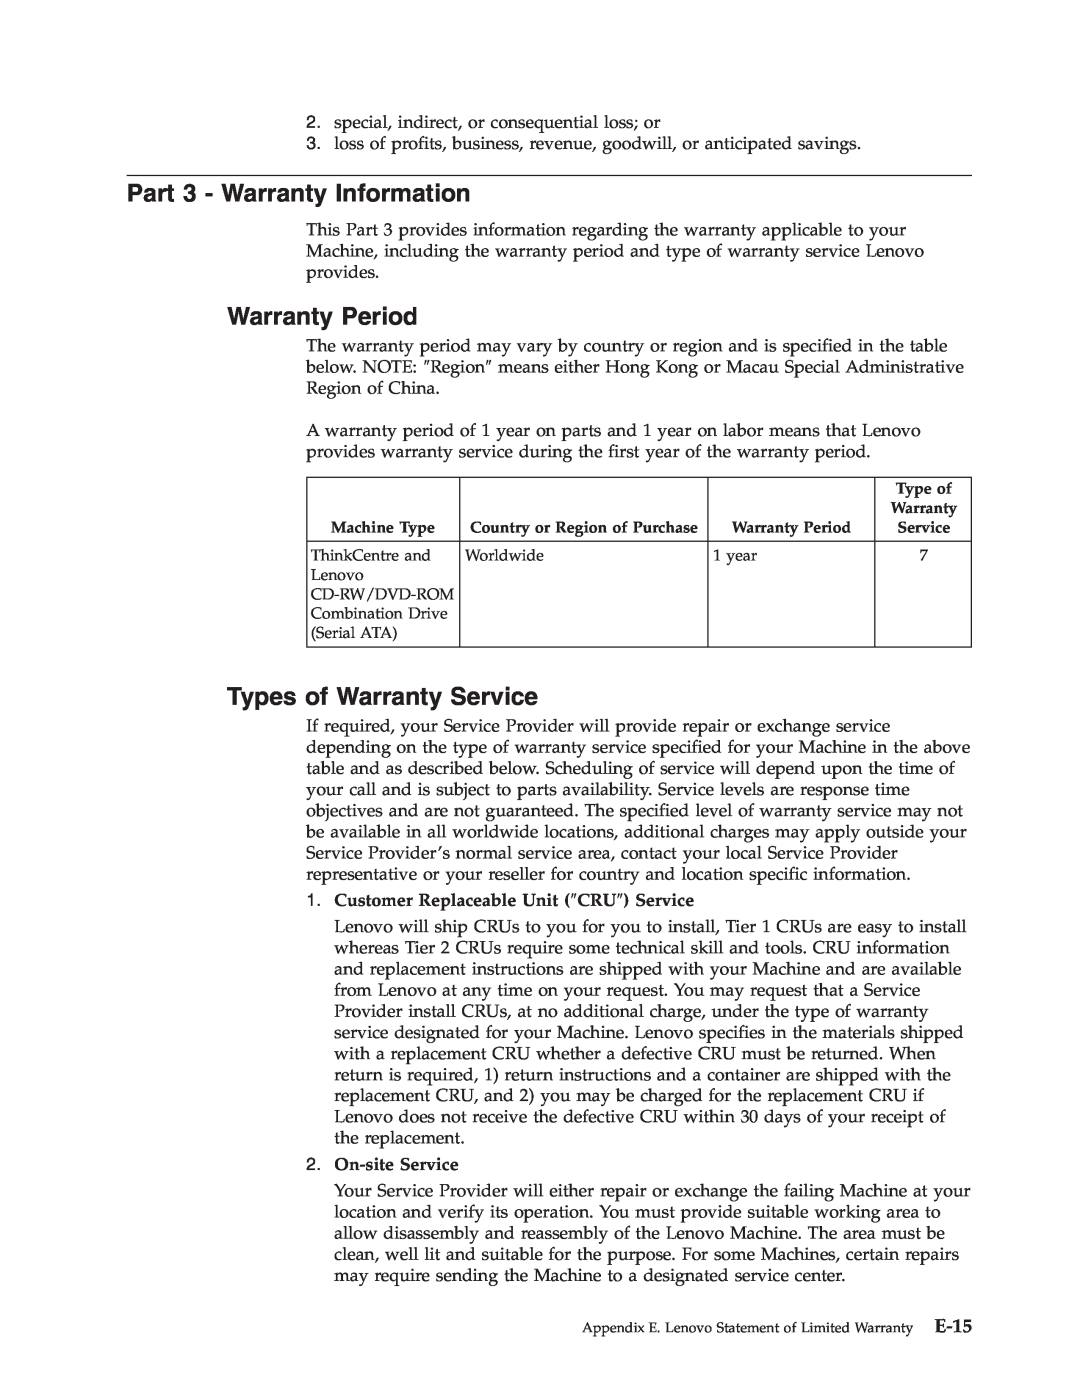 Lenovo 41N5624 manual Part 3 - Warranty Information, Warranty Period, Types of Warranty Service, On-siteService 